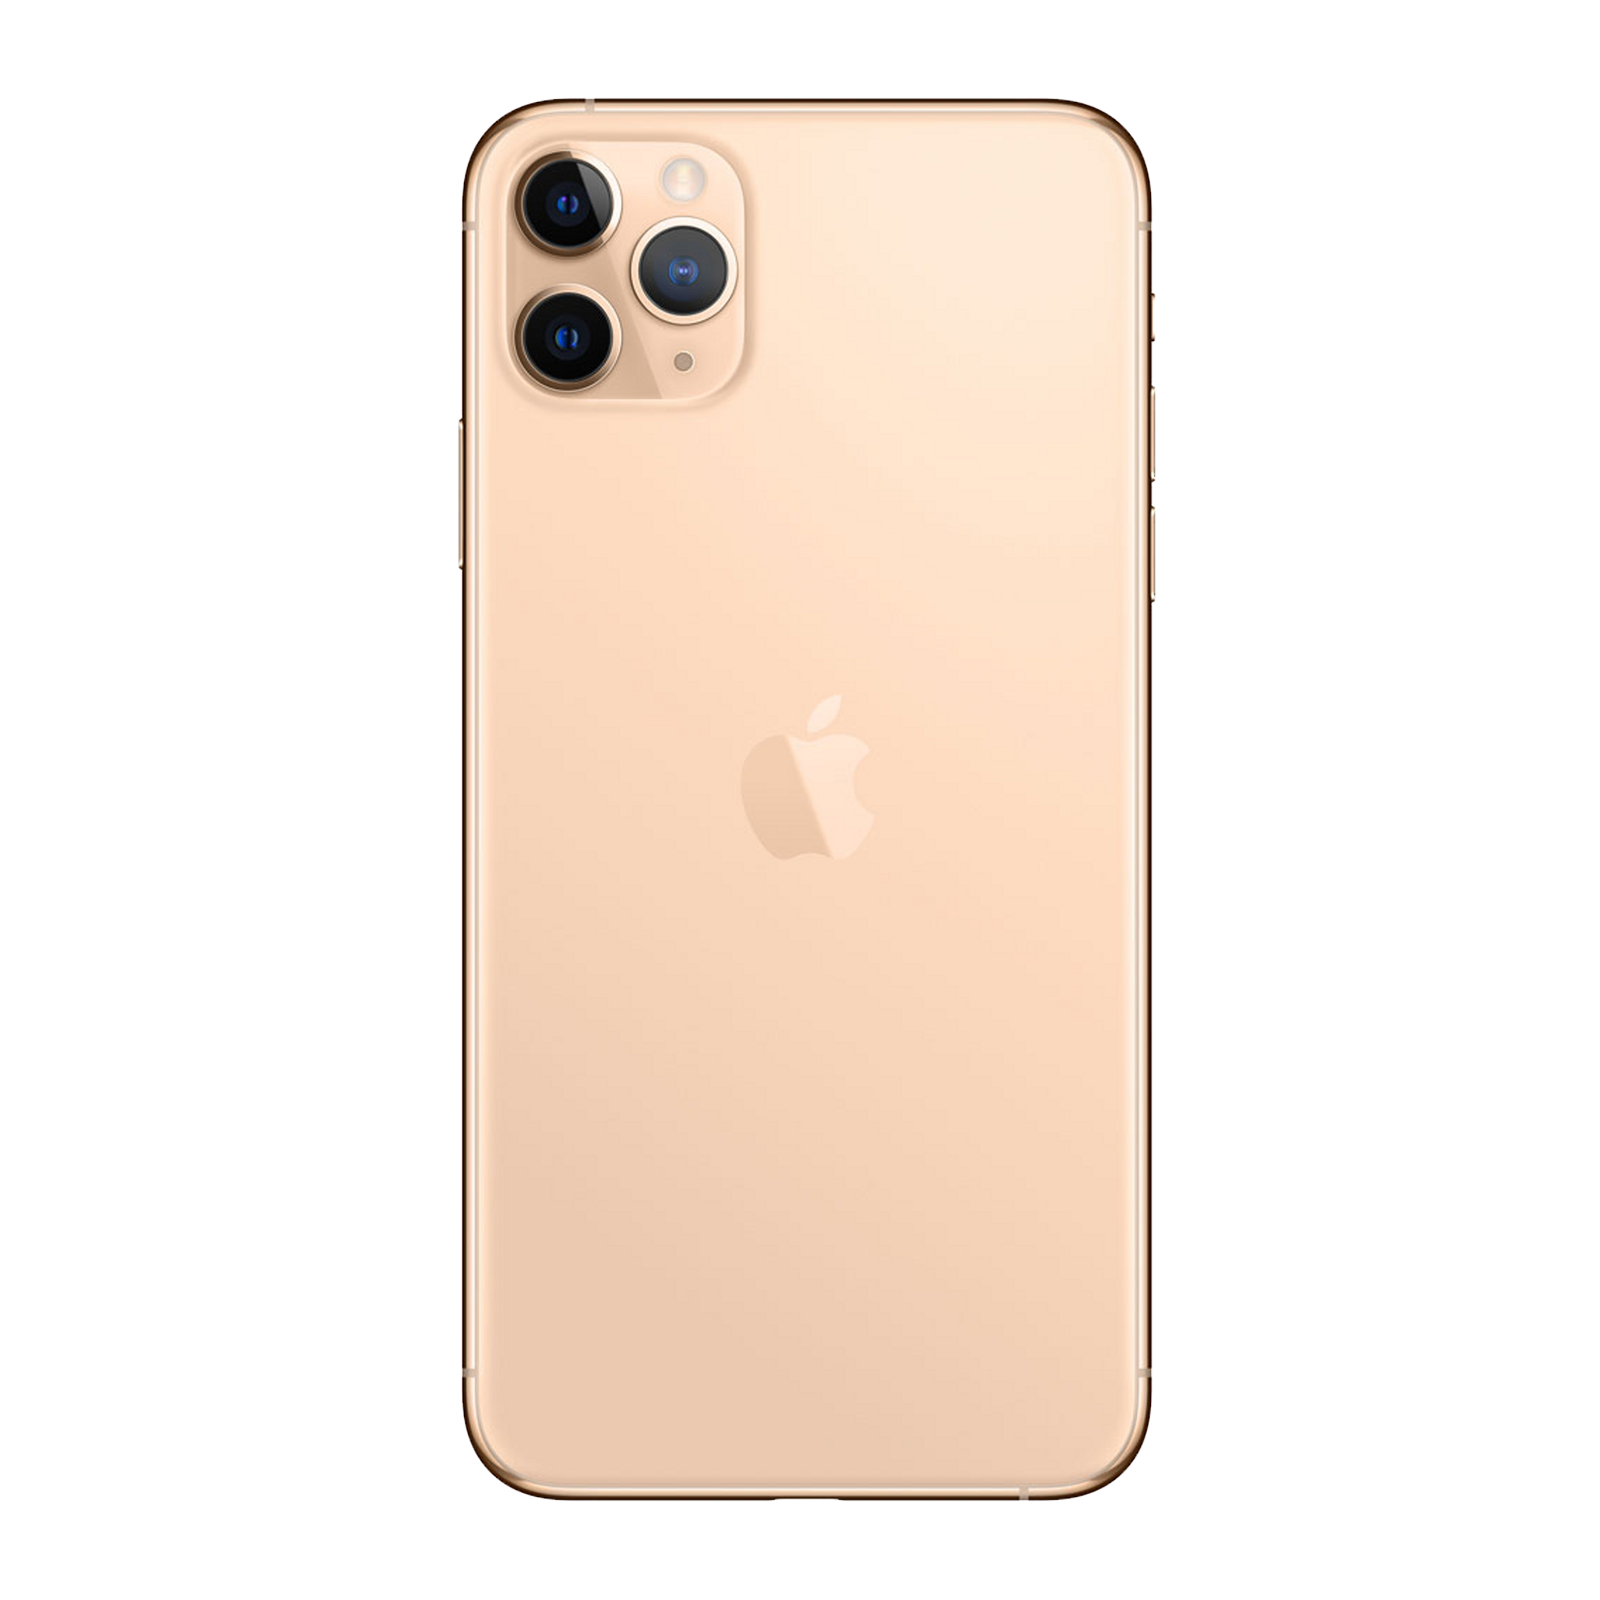 iPhone 11 Pro 512GB Gold Fair Unlocked - New Battery